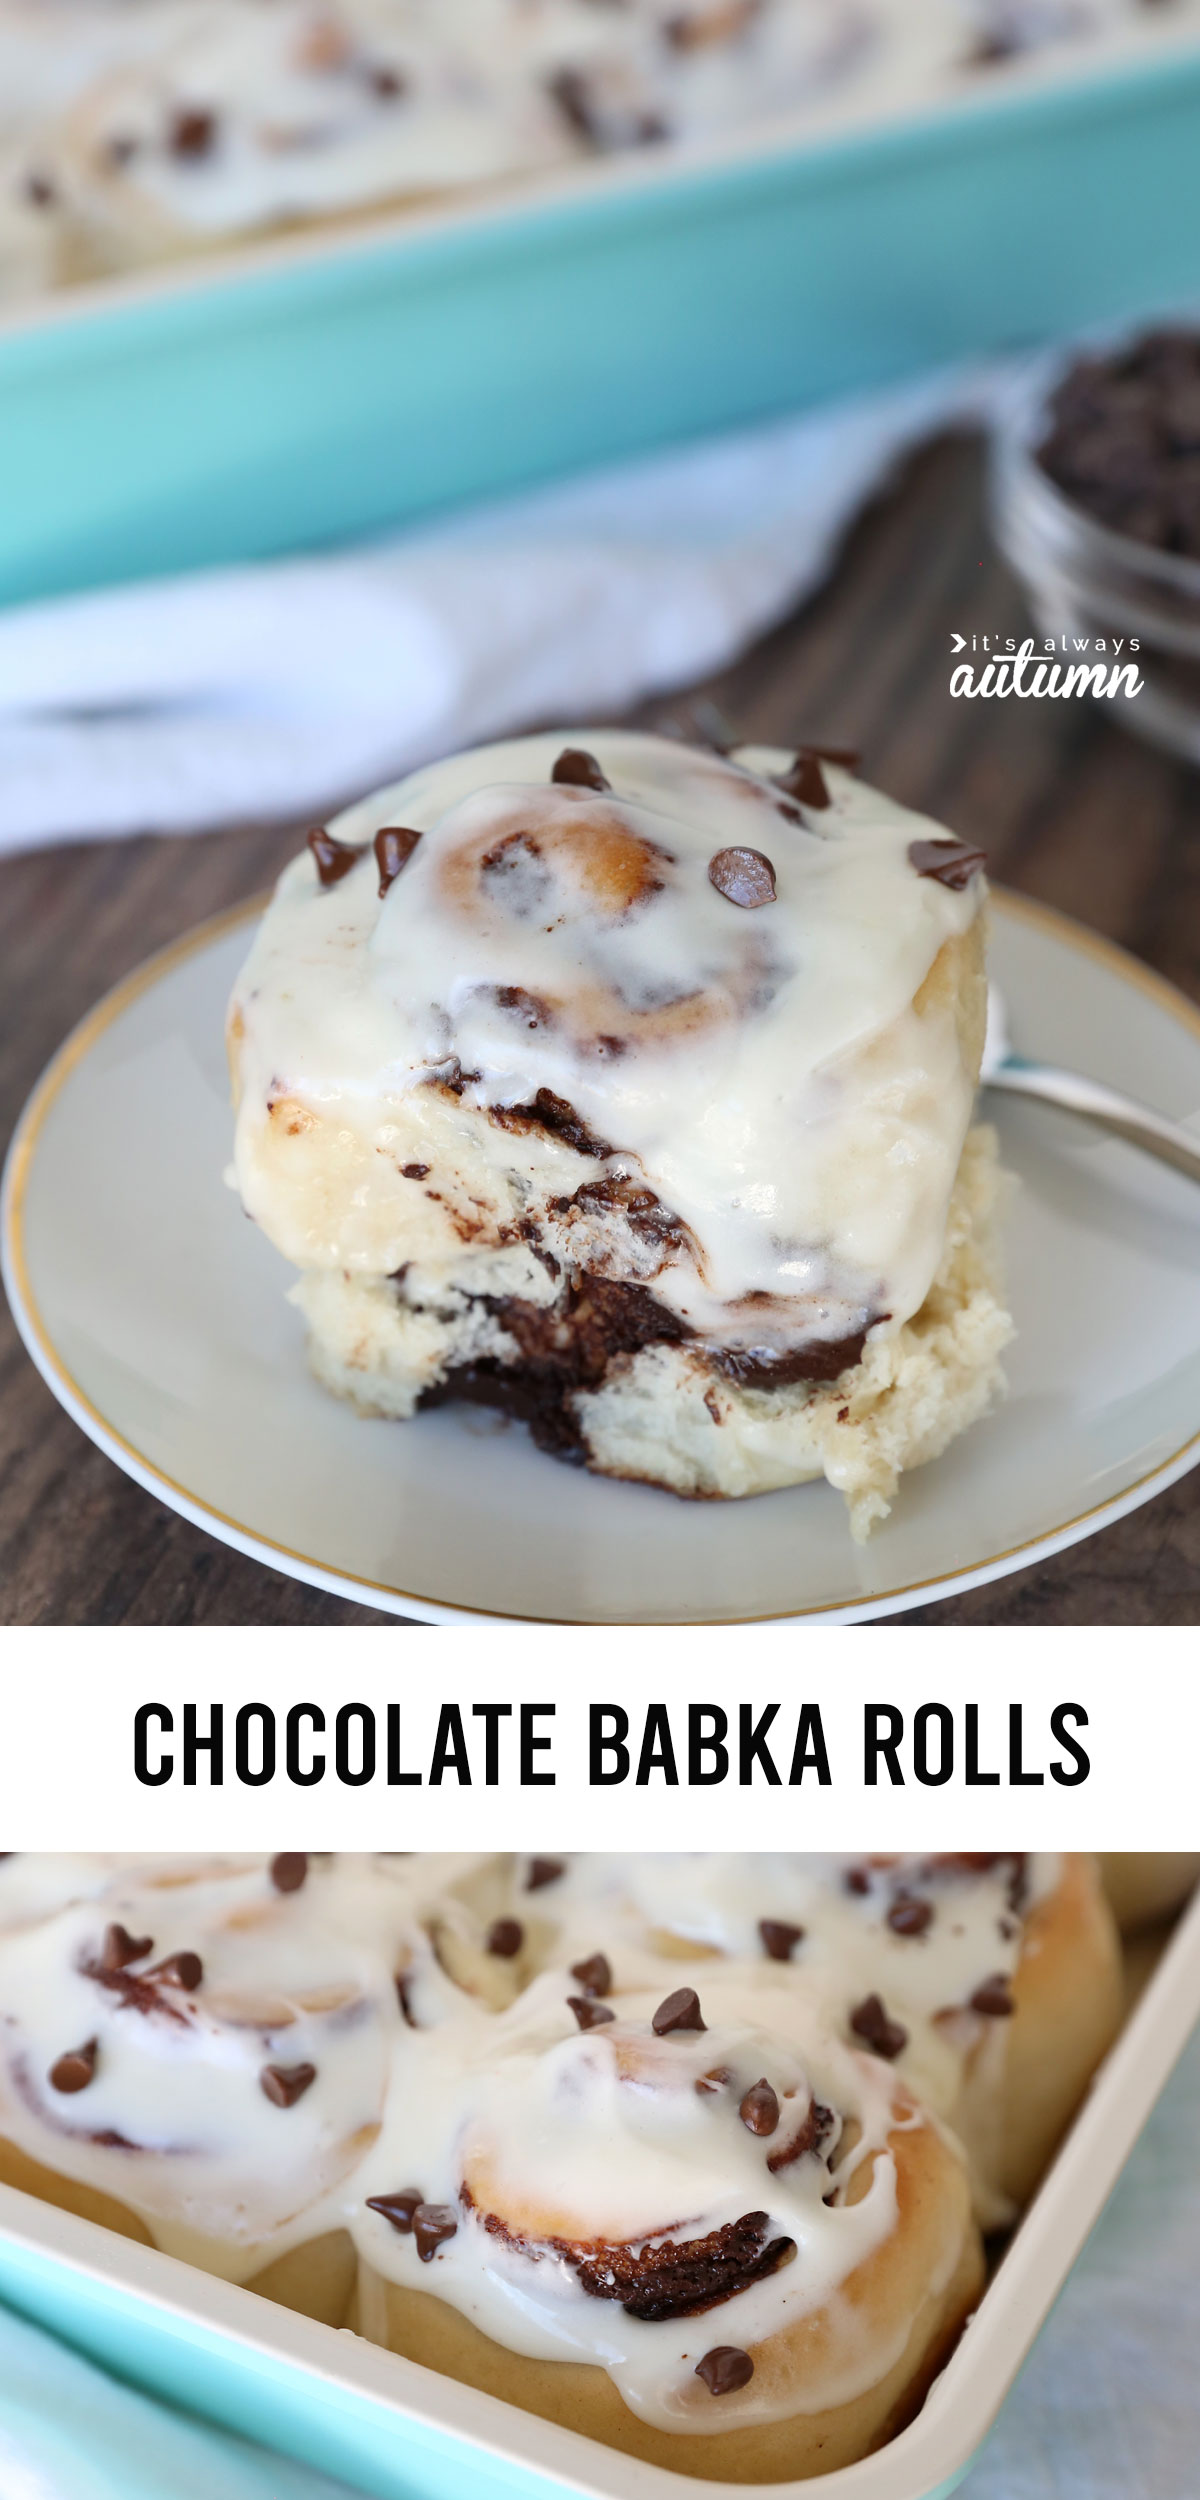 Chocolate babka roll on a plate; chocolate babka rolls in a blue 9x13 pan